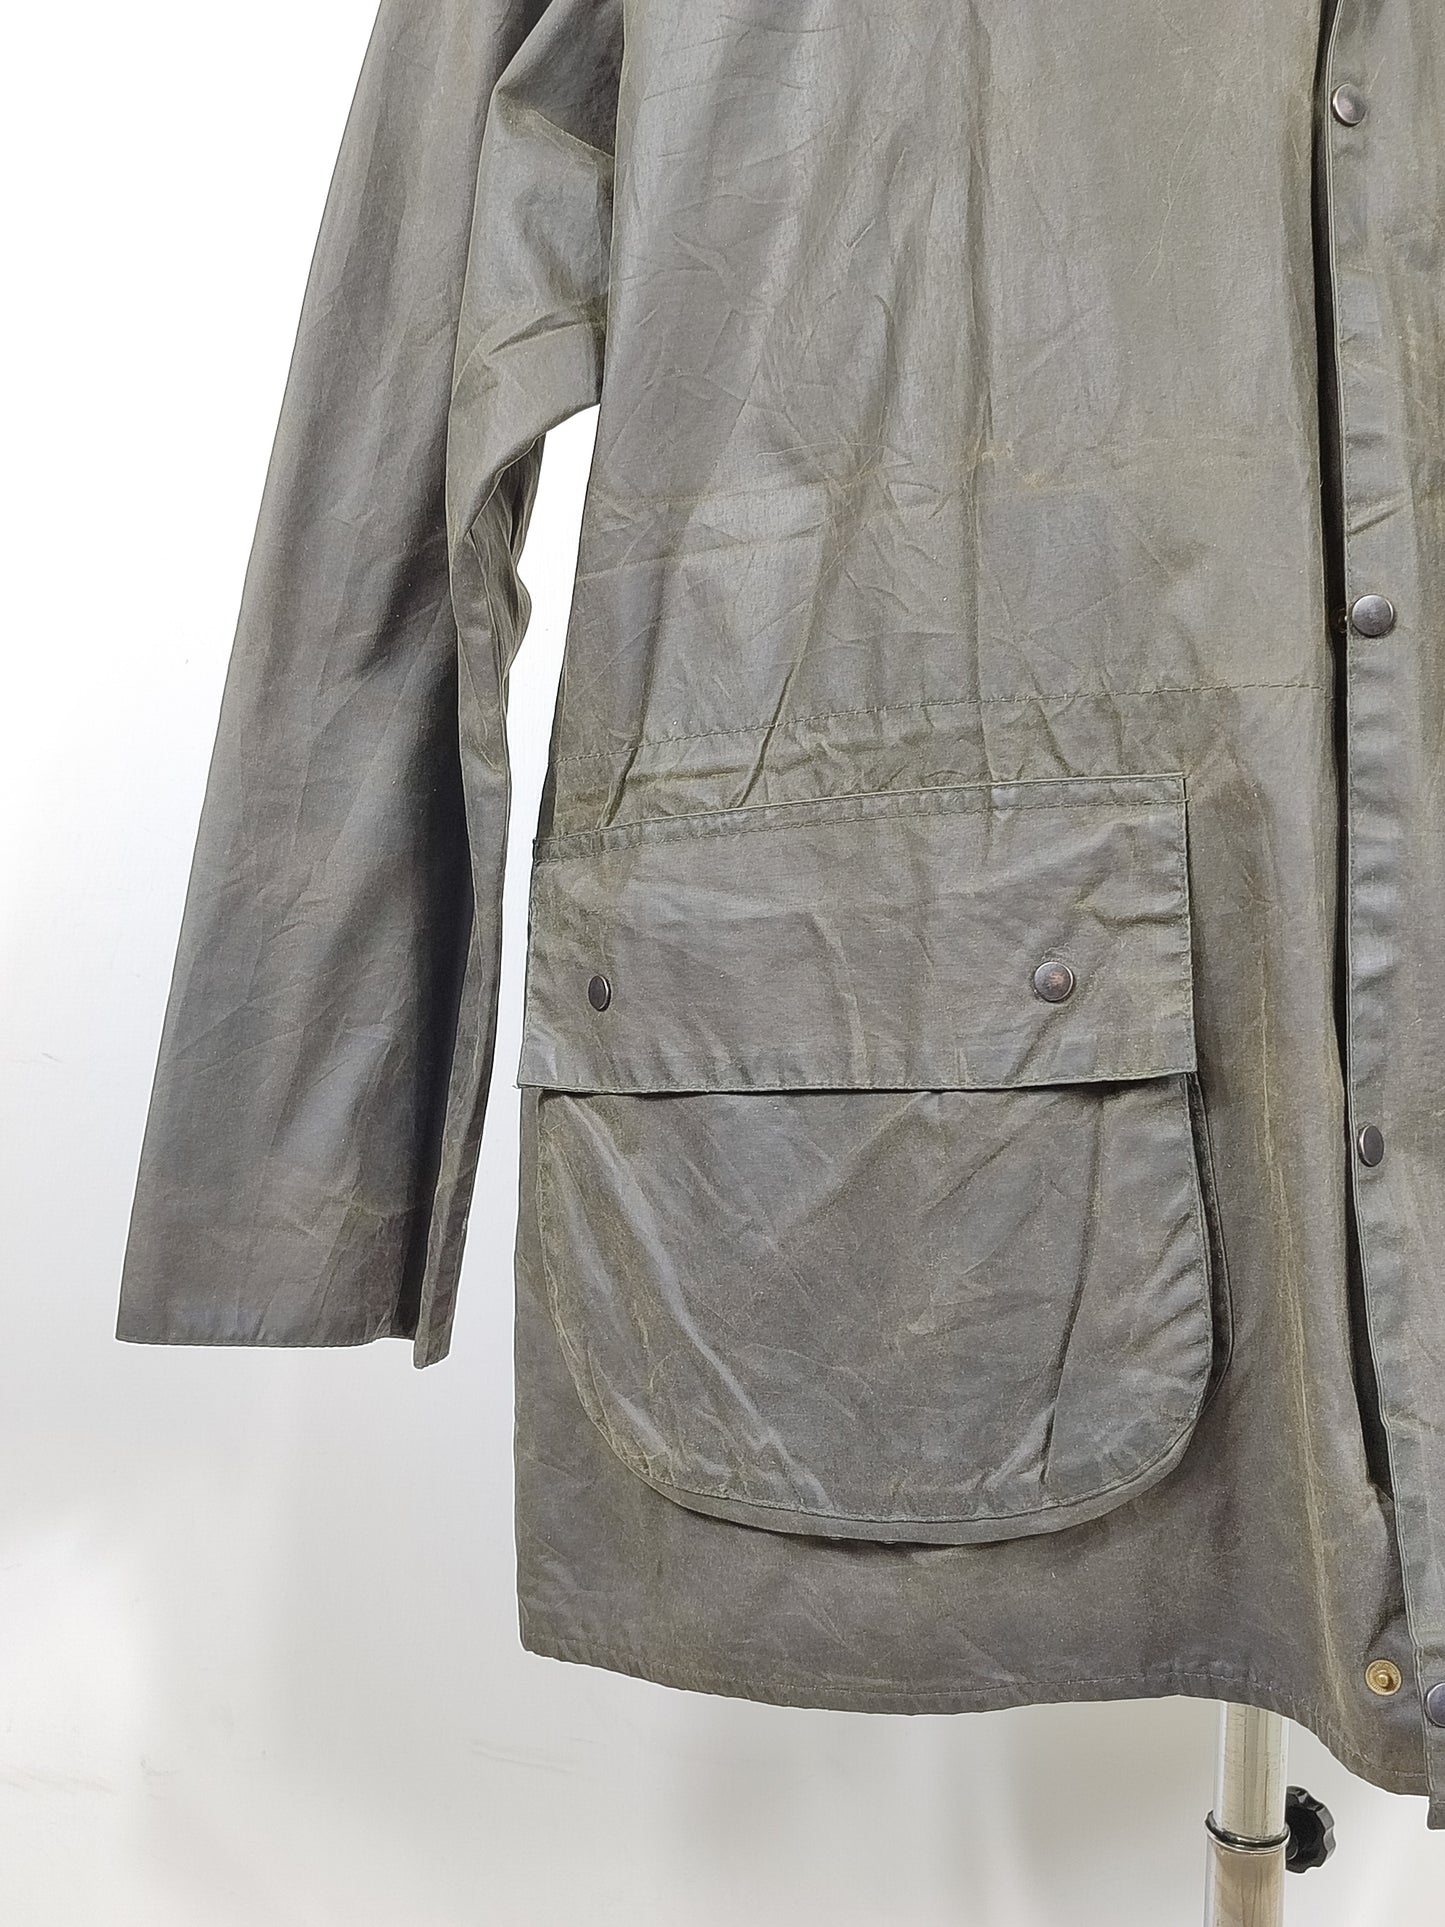 Giacca Barbour verde vintage Durham C40/102 cm- Waxed Durham green jacket Size M